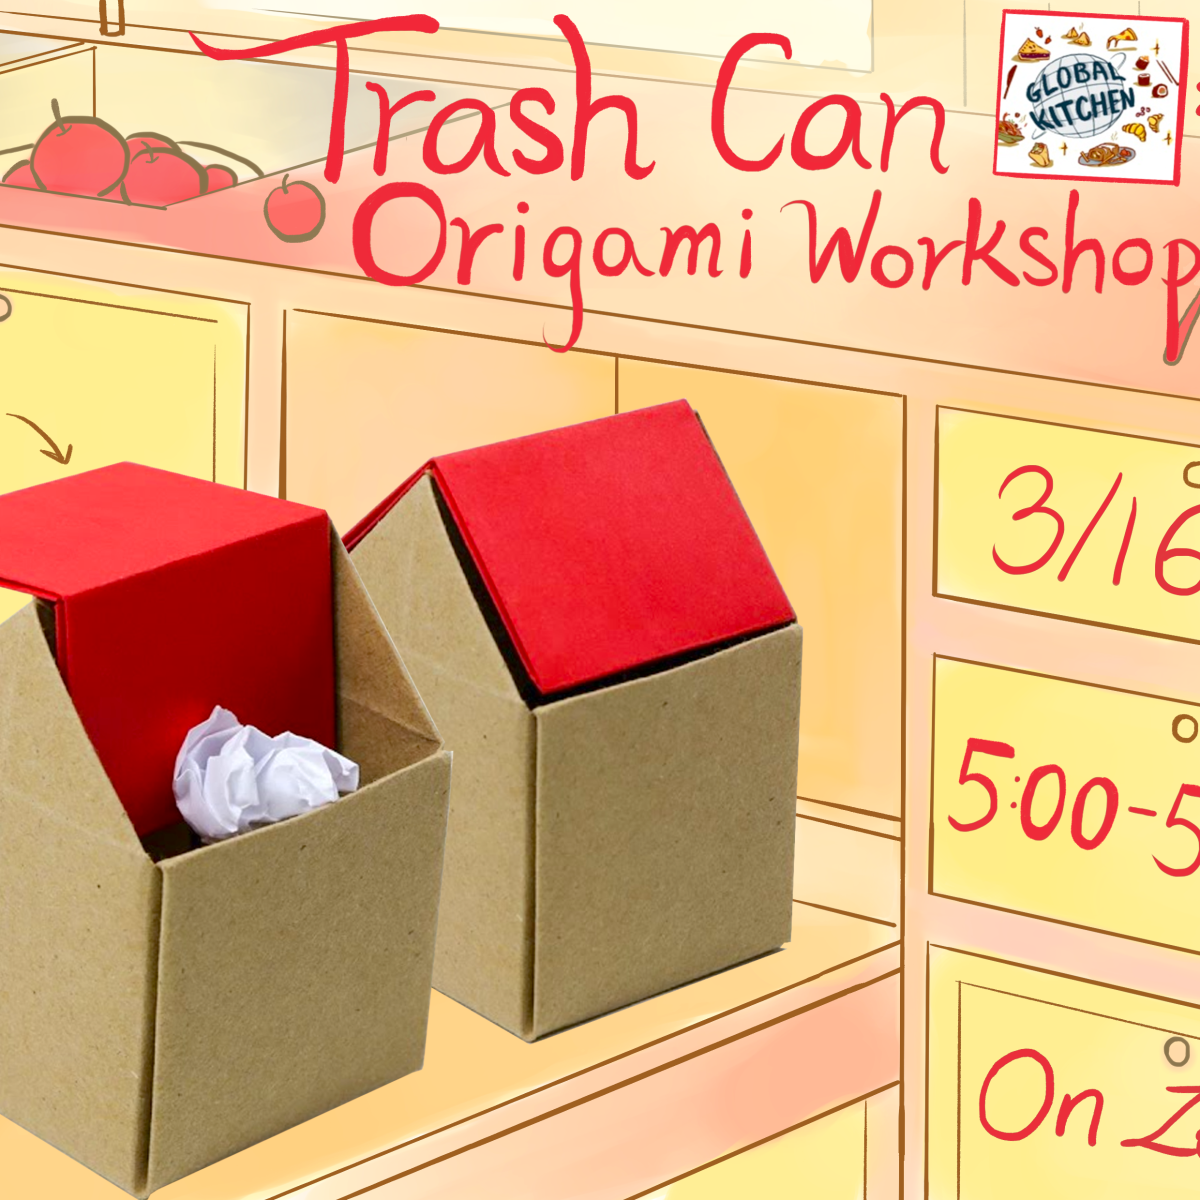 Trash Can Workshop! UofT x Global Kitchen